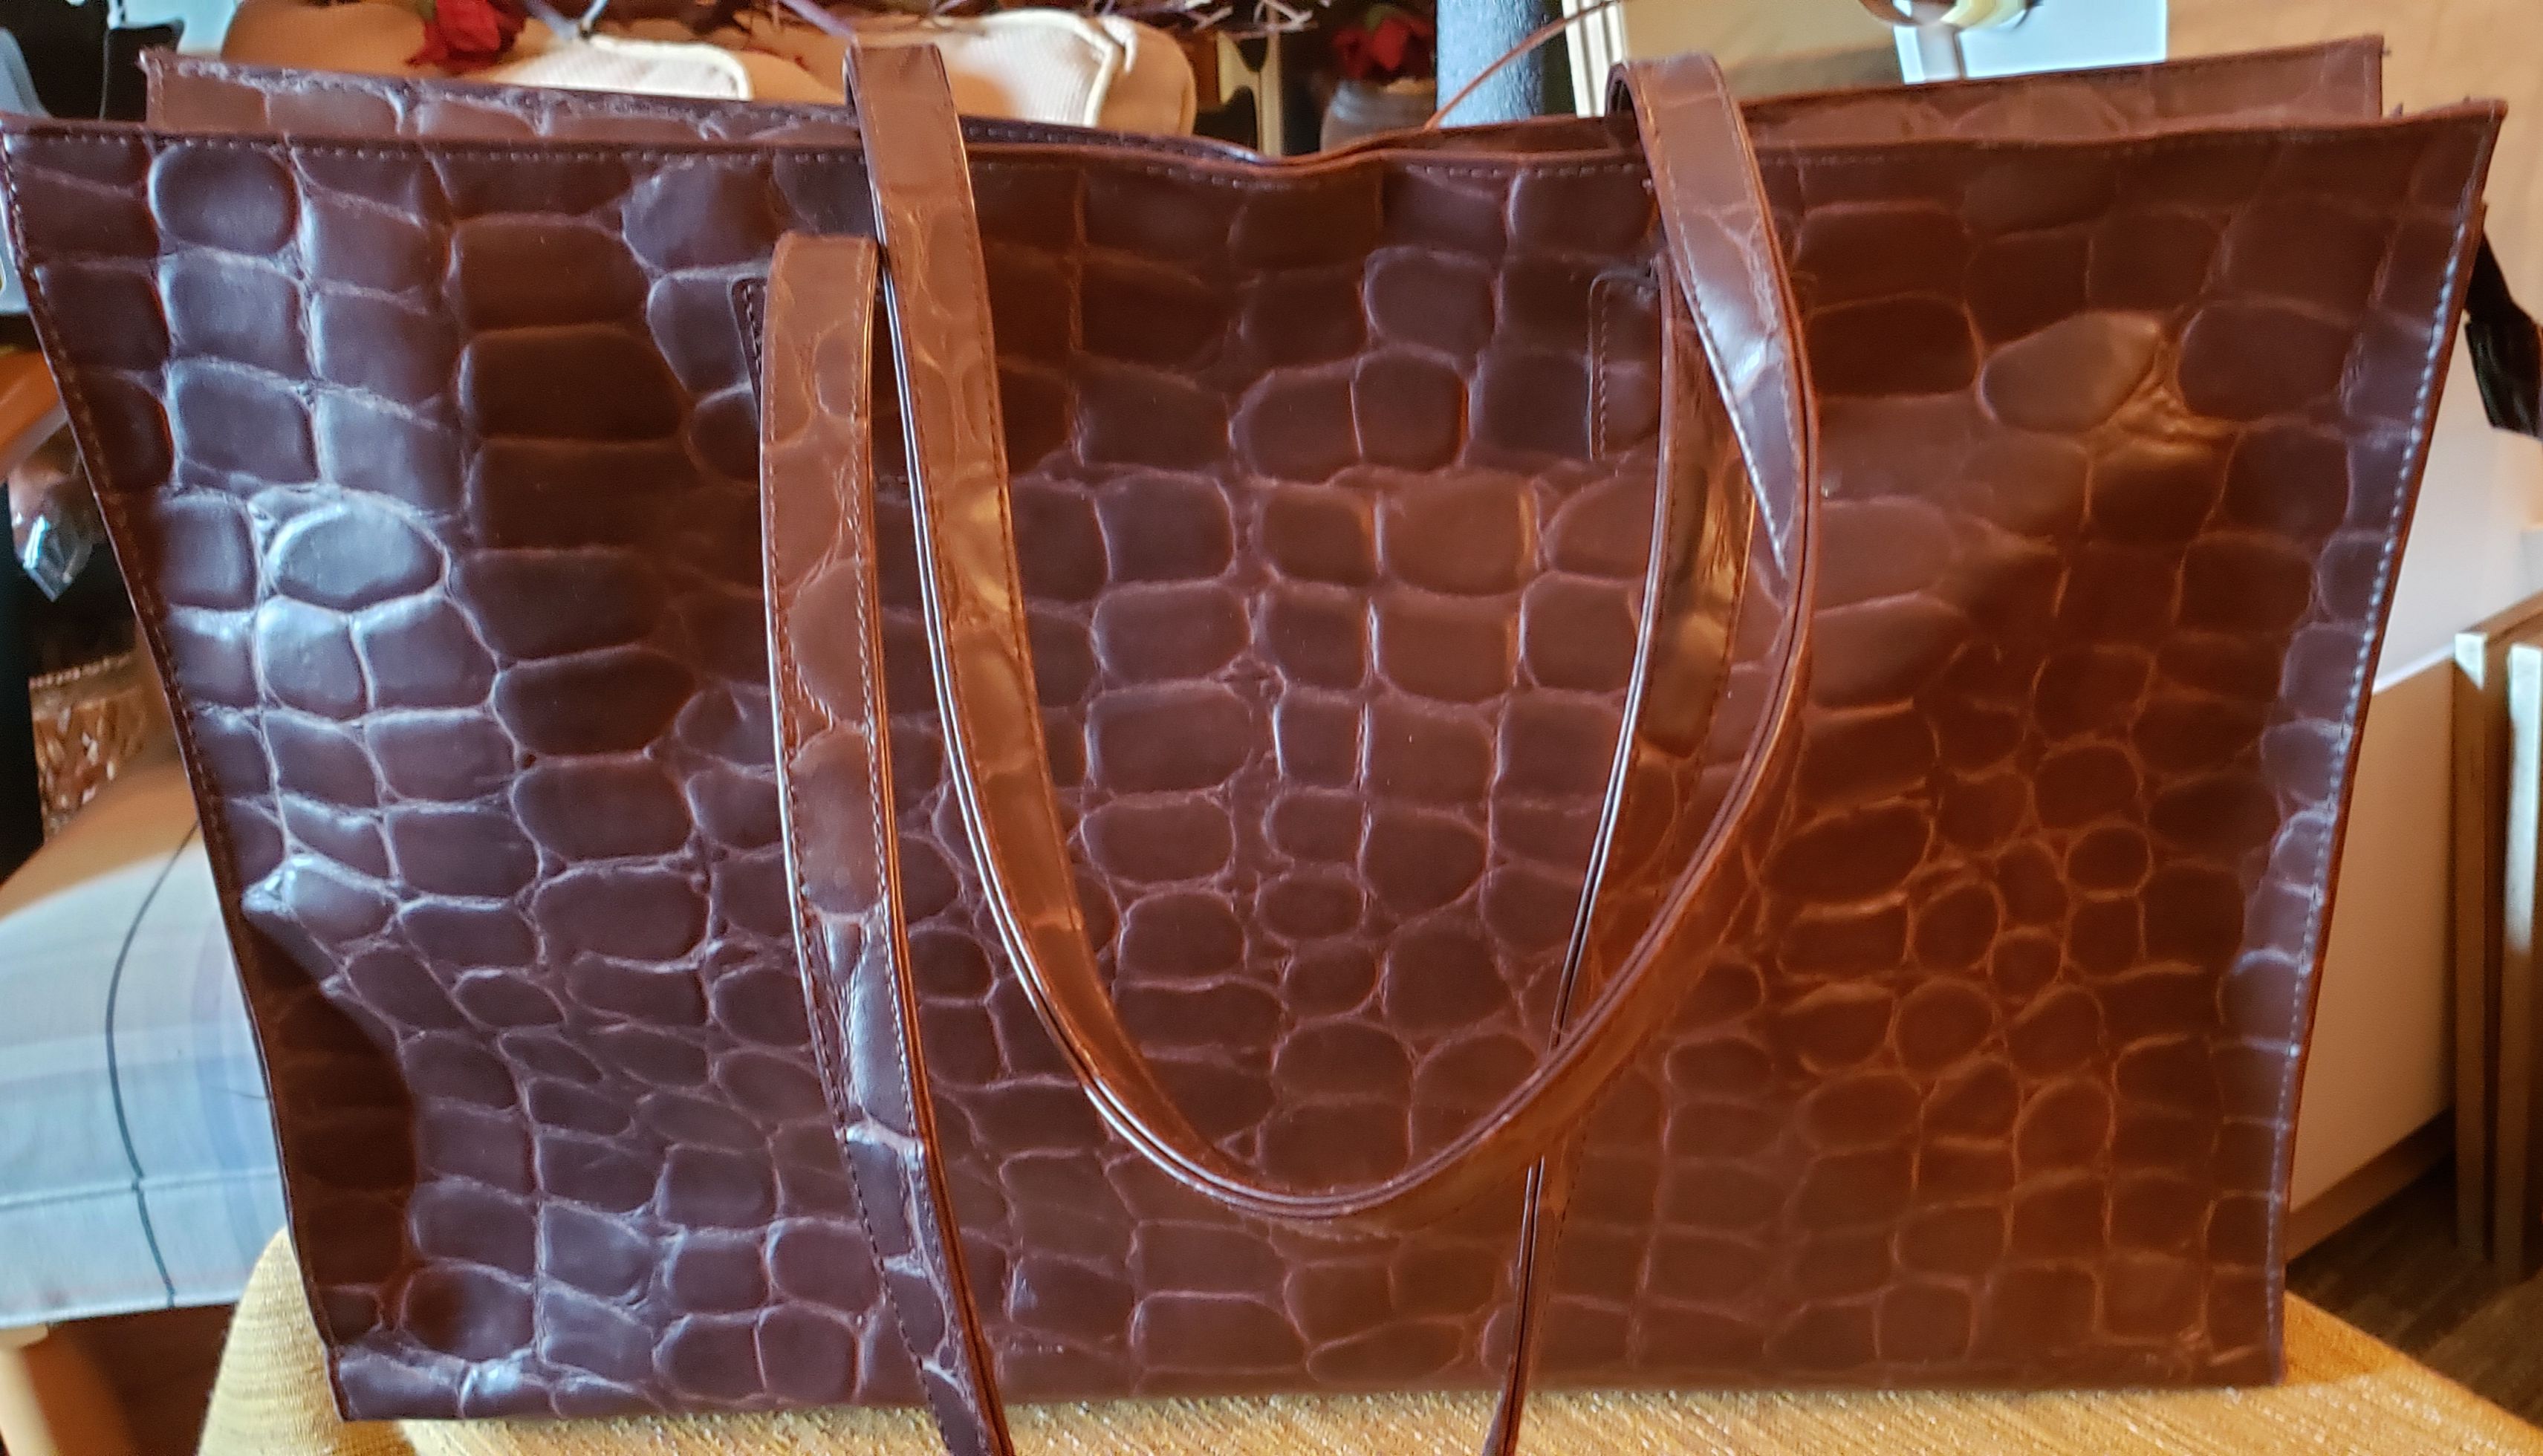 Estee Lauder Purse Embossed Alligator Handbag Brown Tote...Very nice pre-owne bag. 19x12x5 with 12 inch strap drop